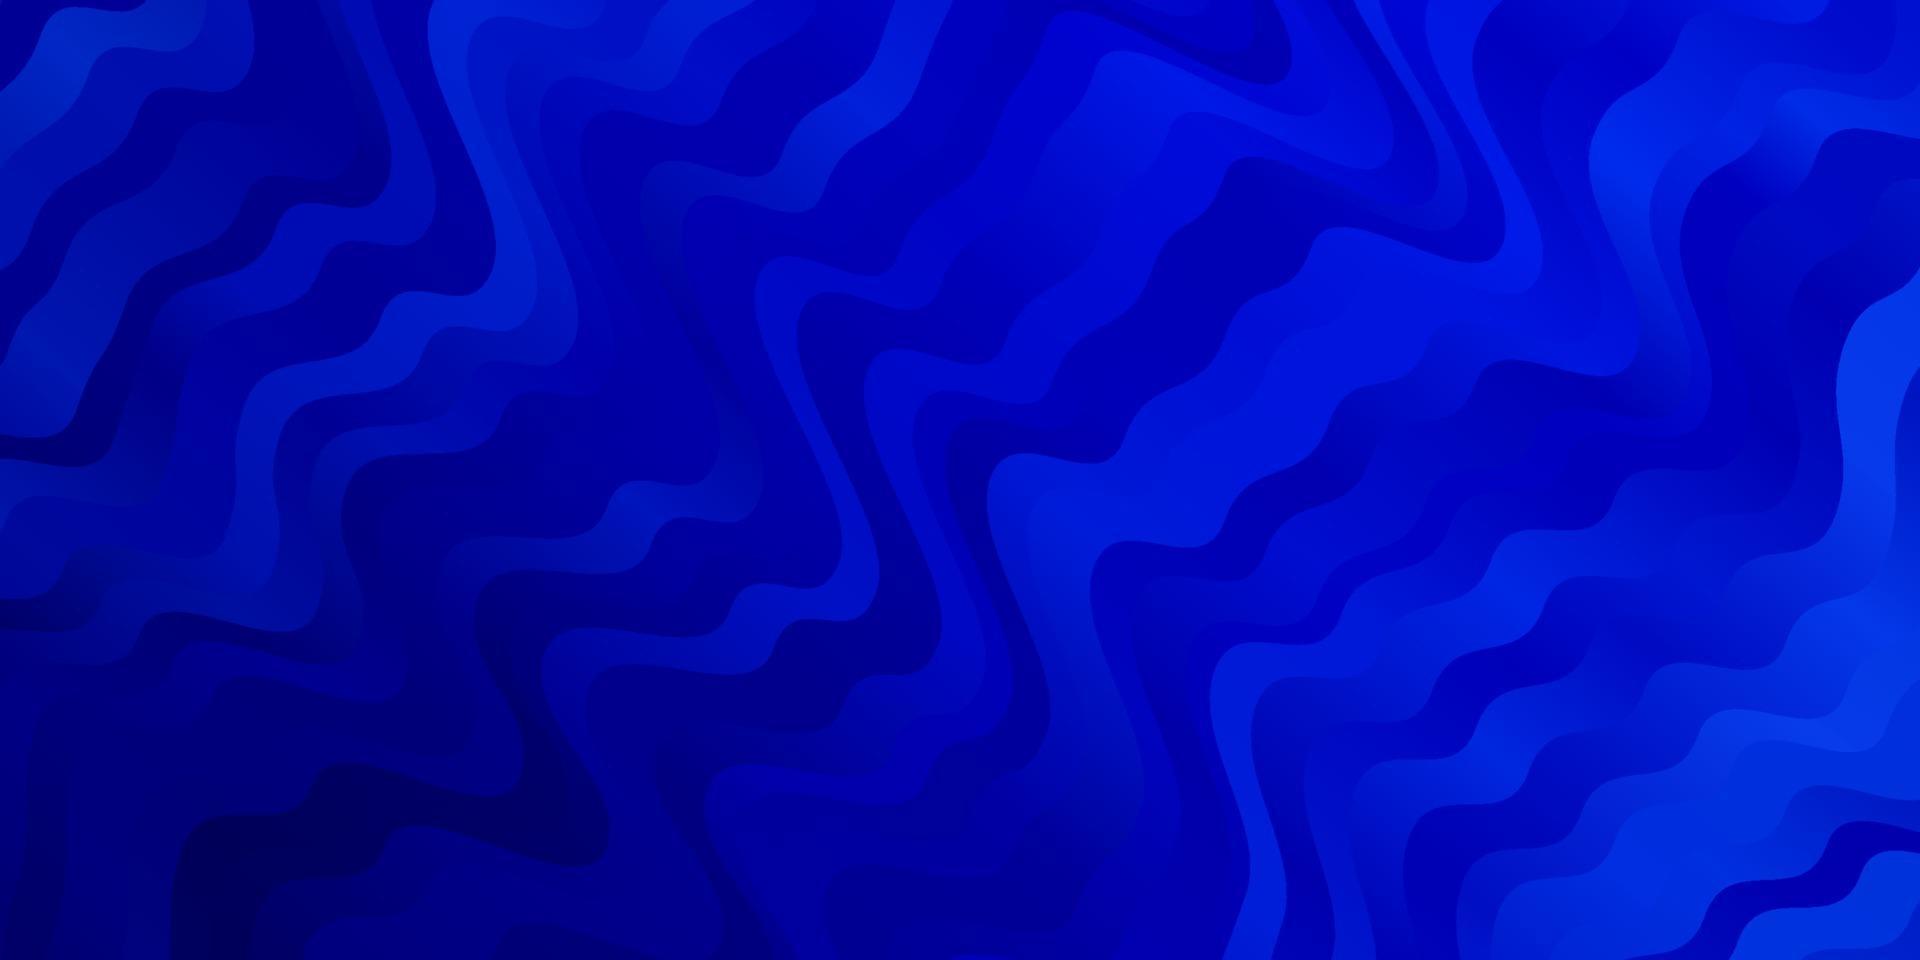 patrón de vector azul claro con curvas.